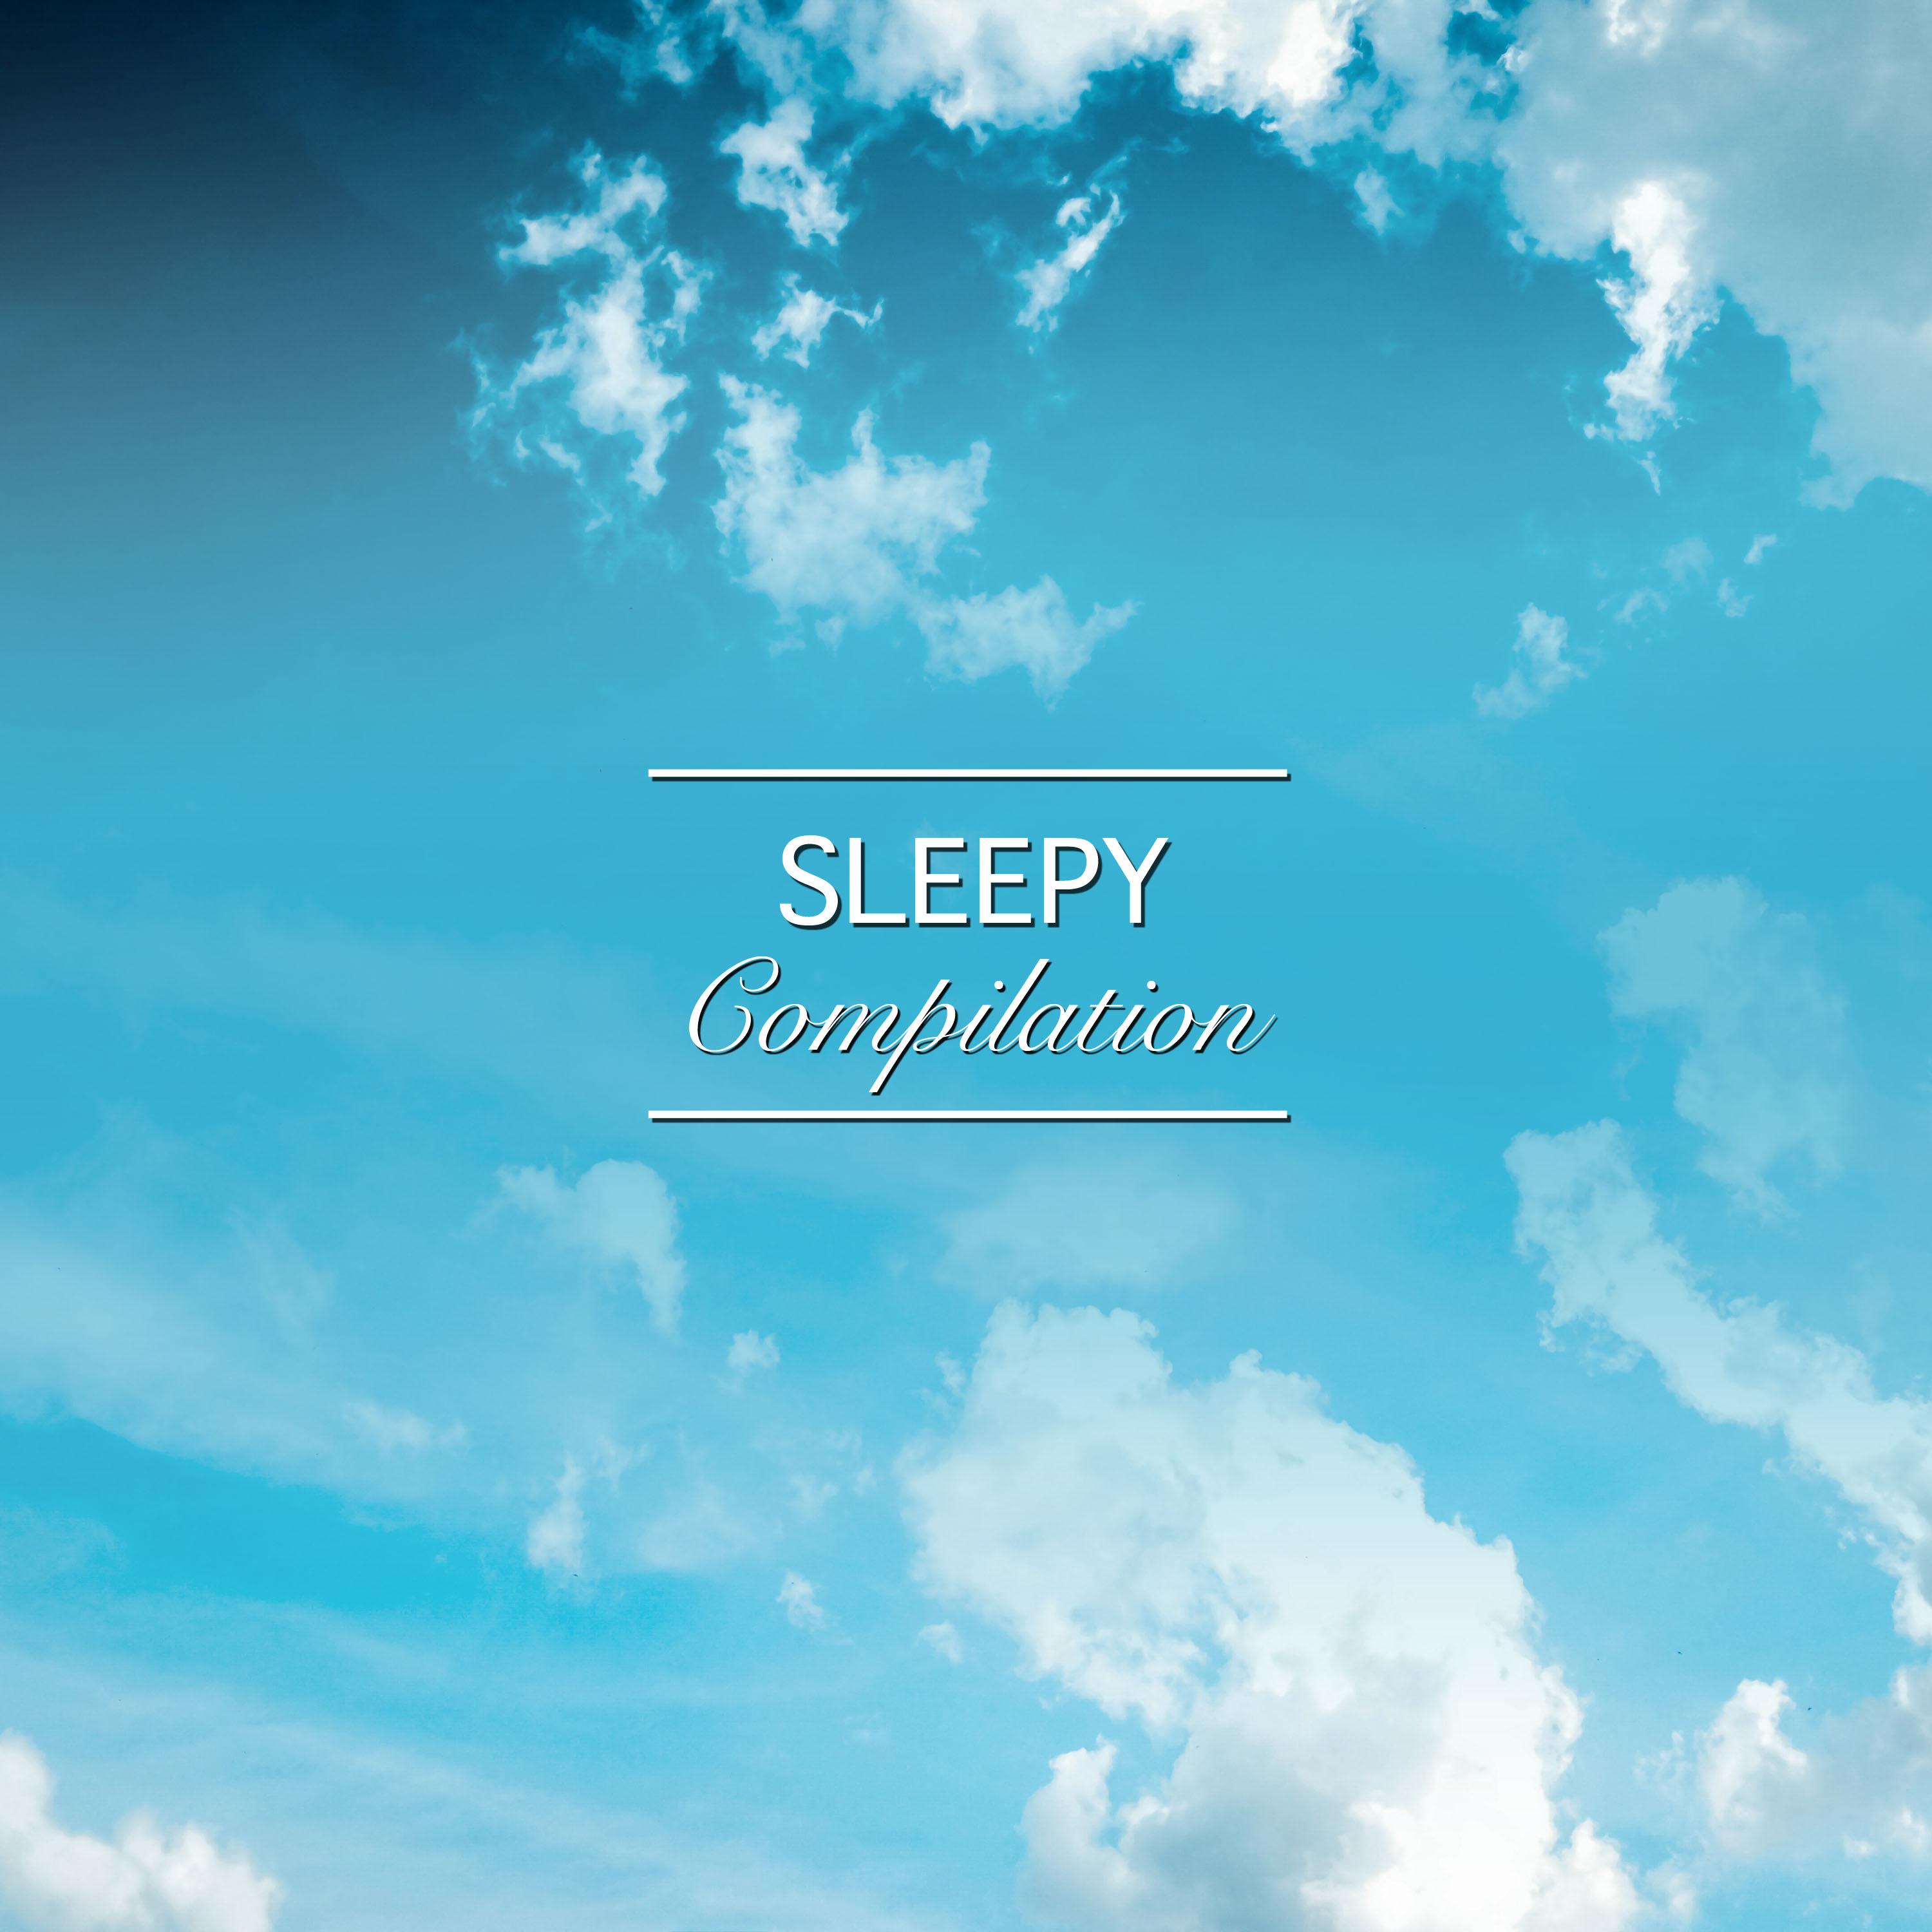 #15 Sleepy Compilation for Reiki & Relaxation